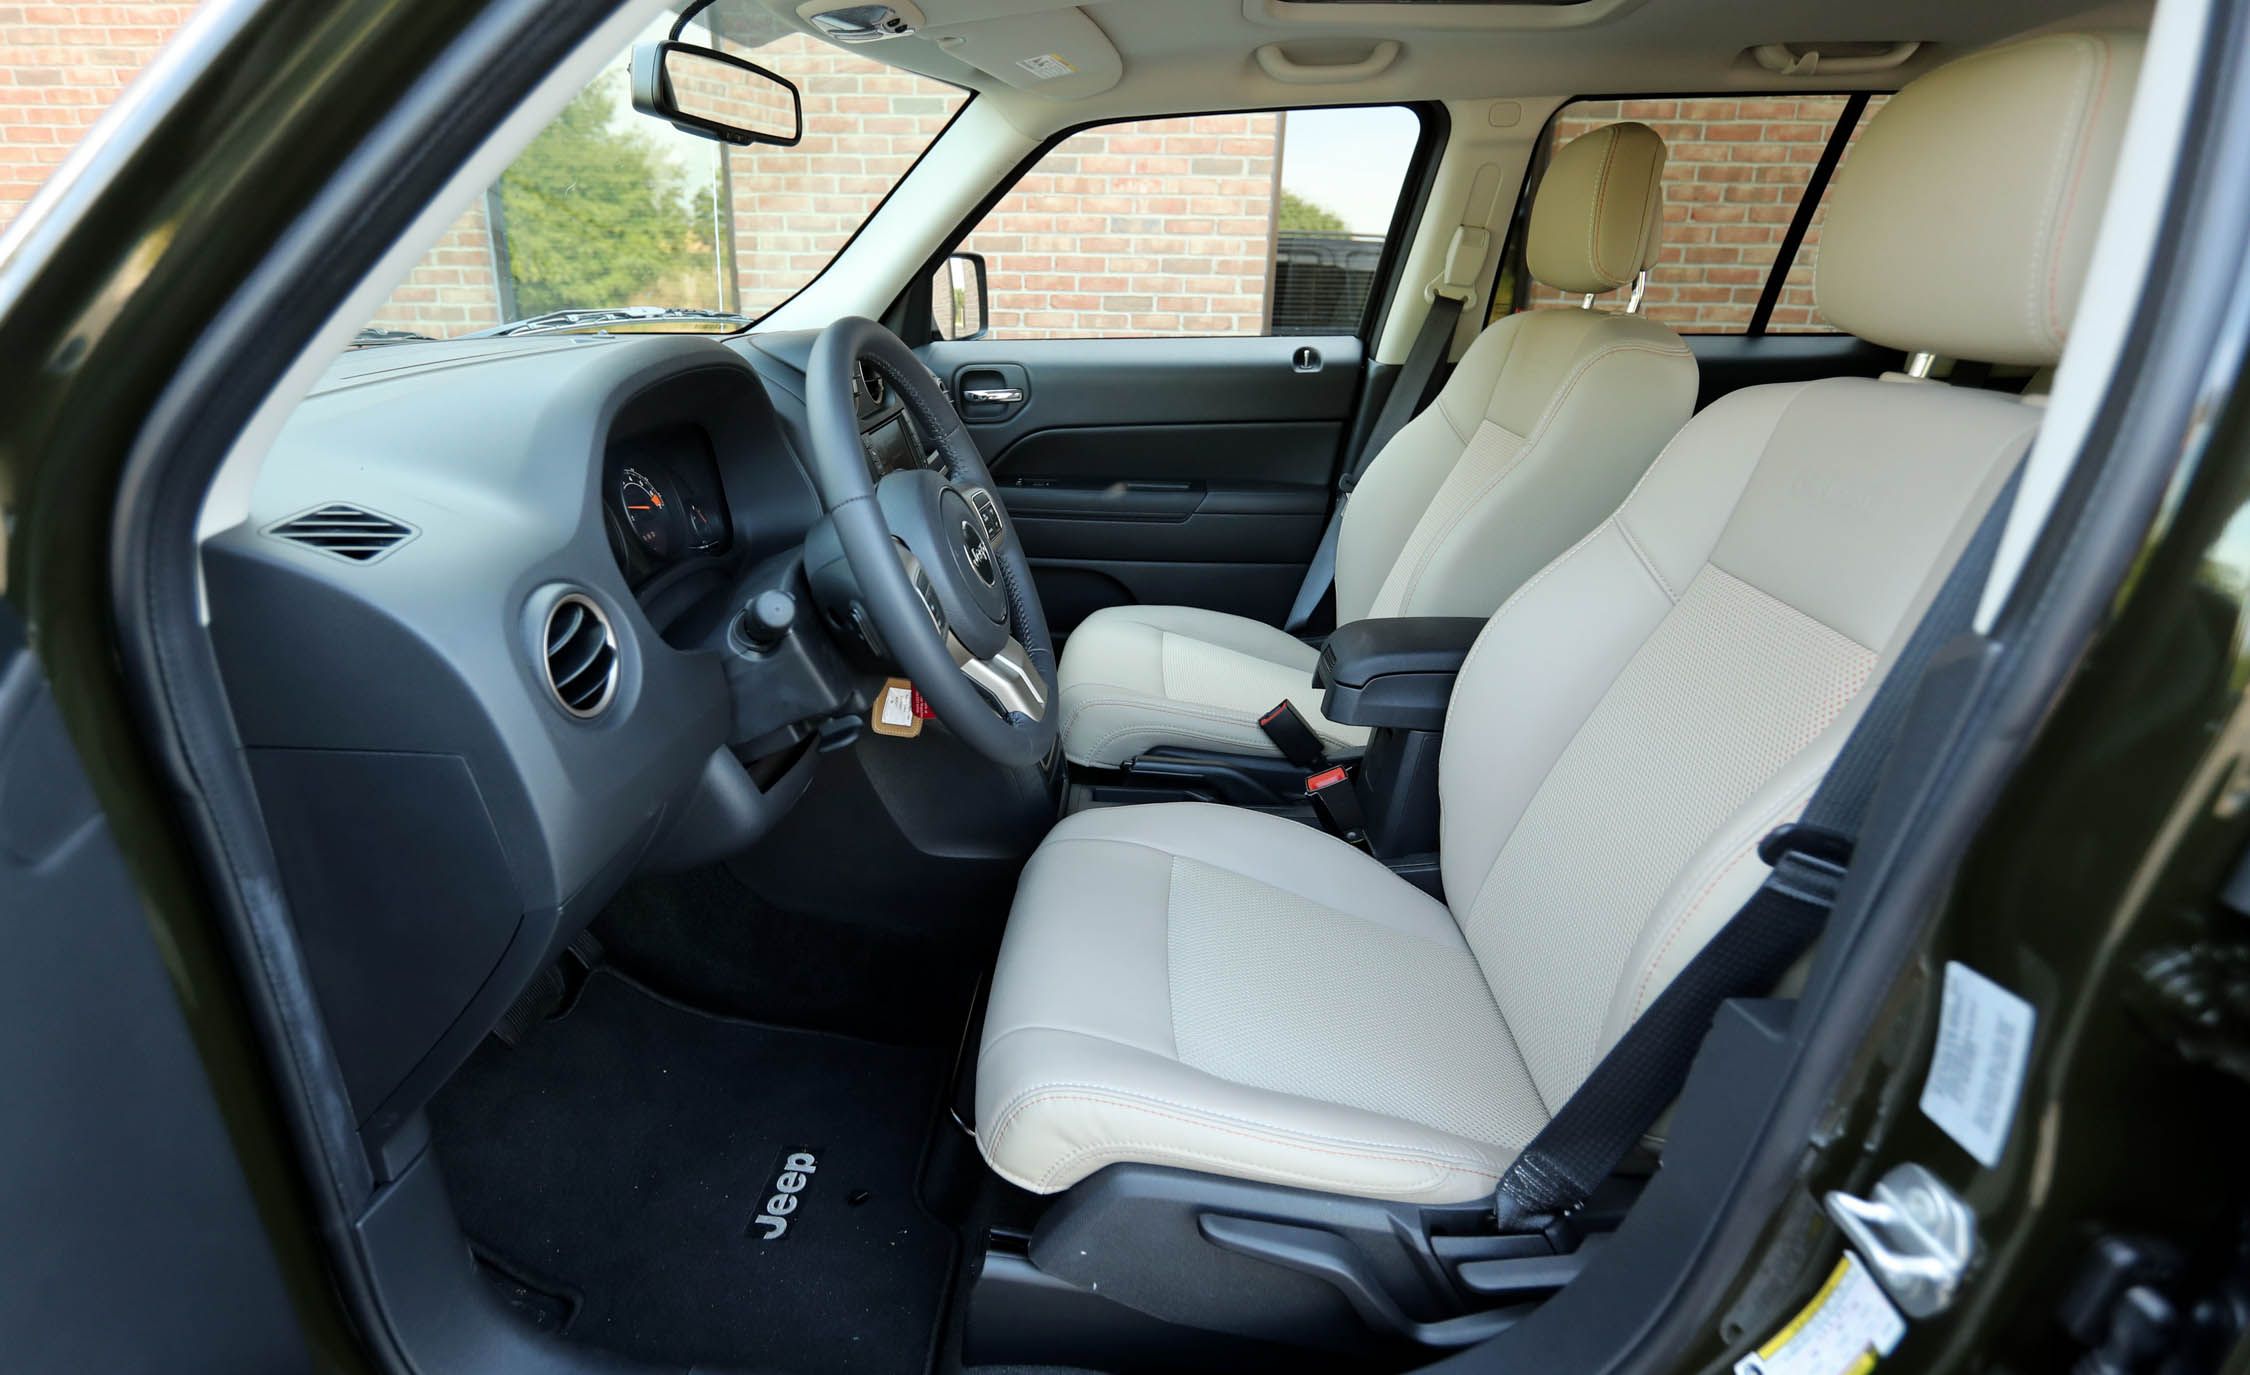 2016 Jeep Patriot Interior Seats Cockpit (View 14 of 27)